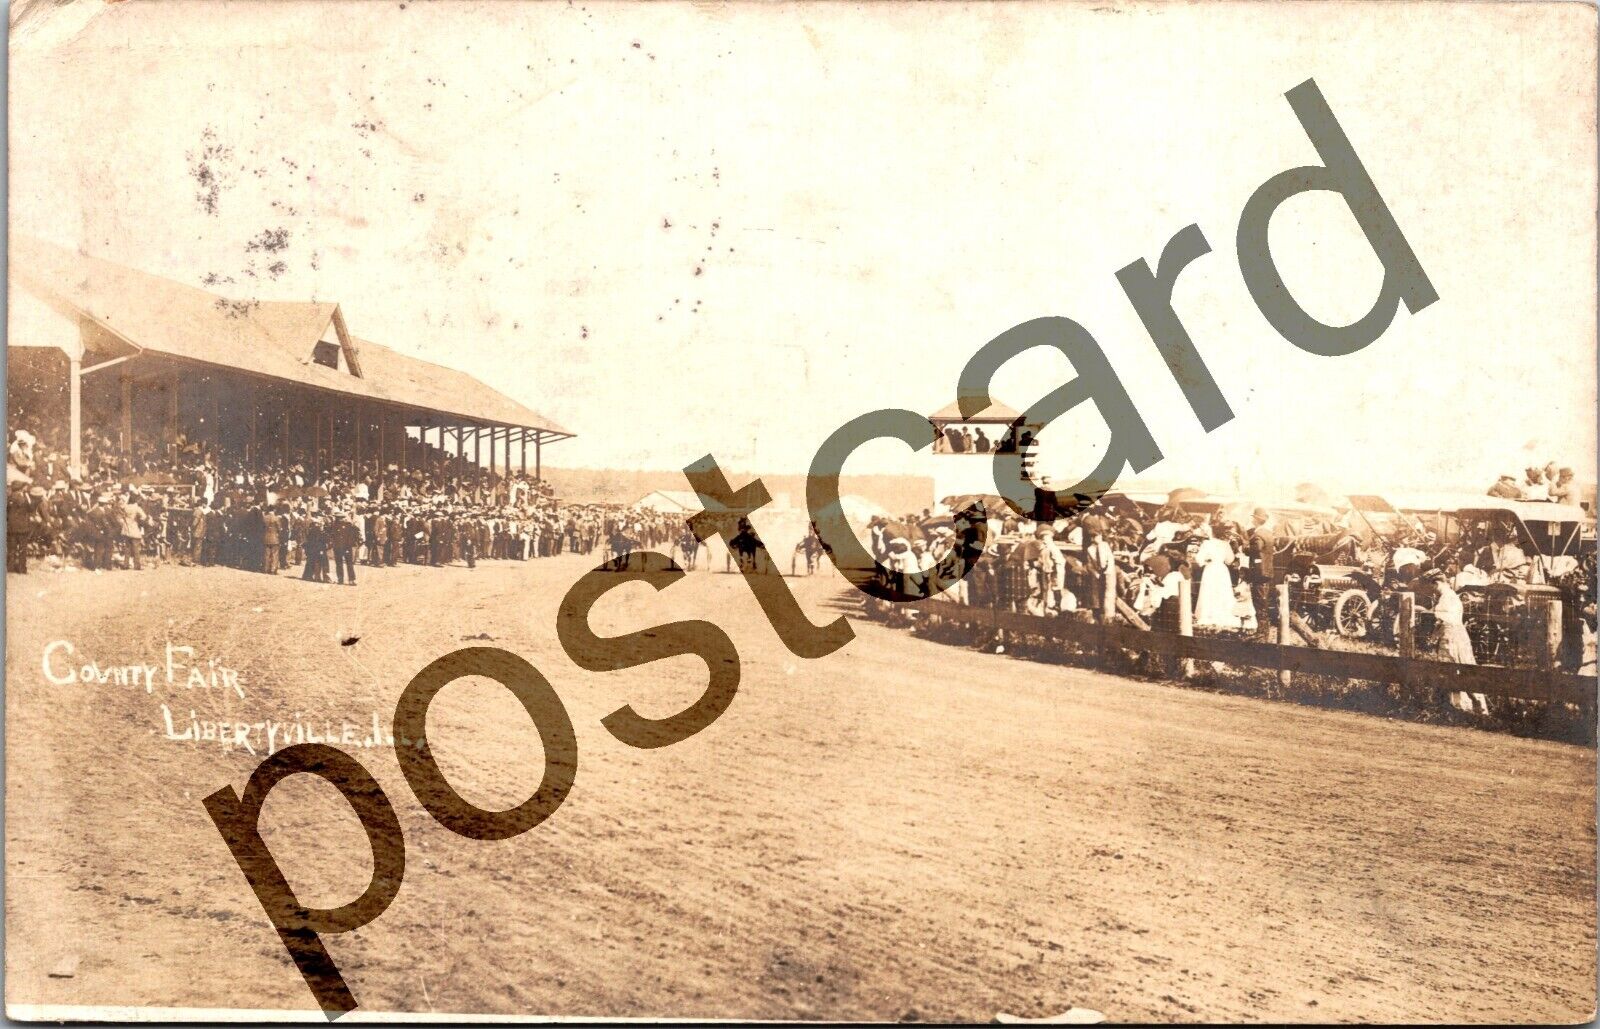 1907 County Fair, LIBERTYVILLE IL, horse racing, postcard jj255